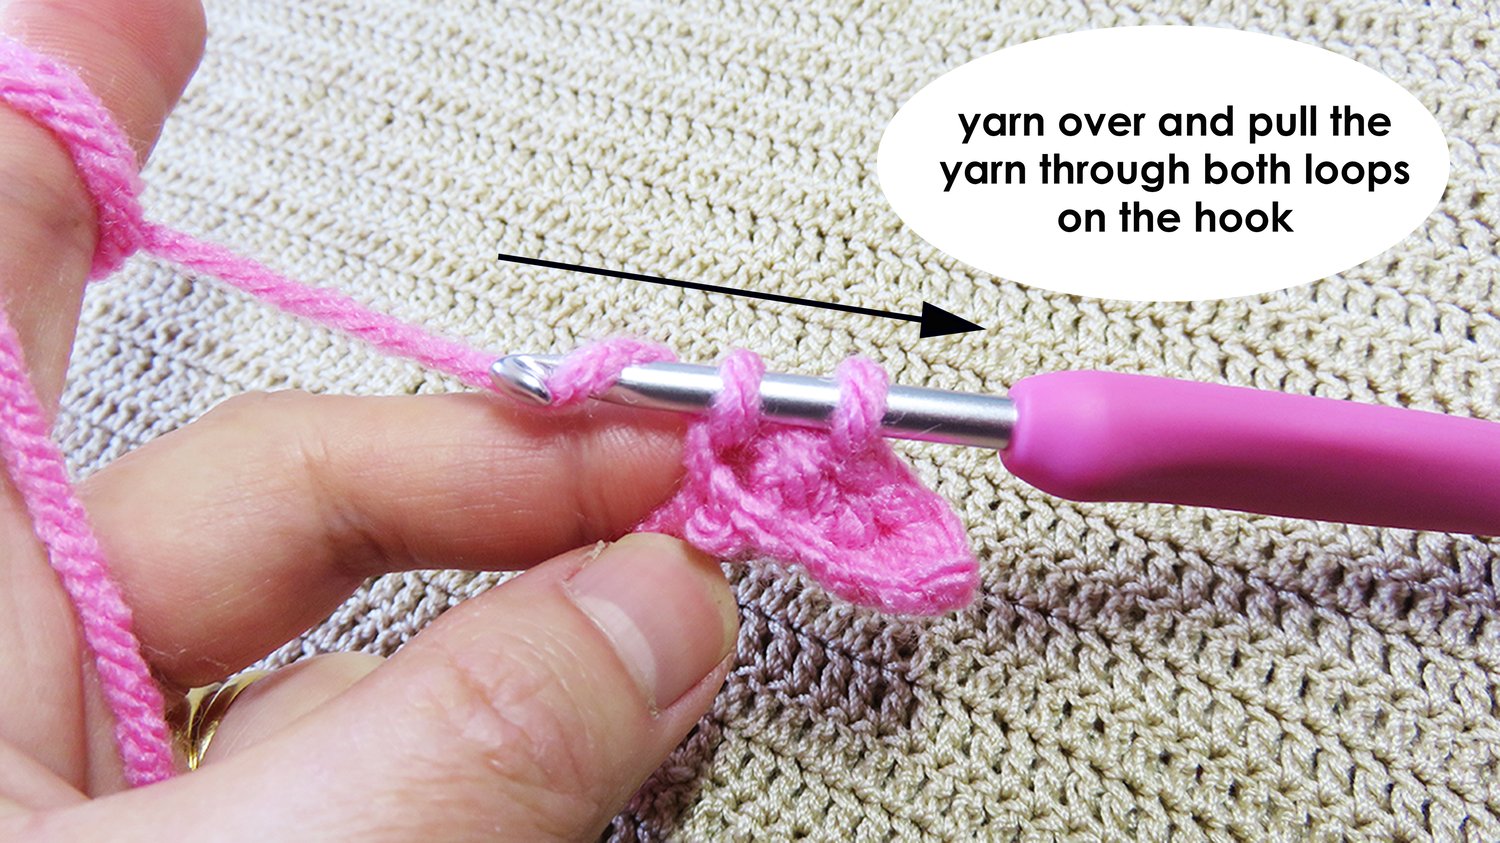 Basic crochet stitches use in Amigurumi crochet pattern